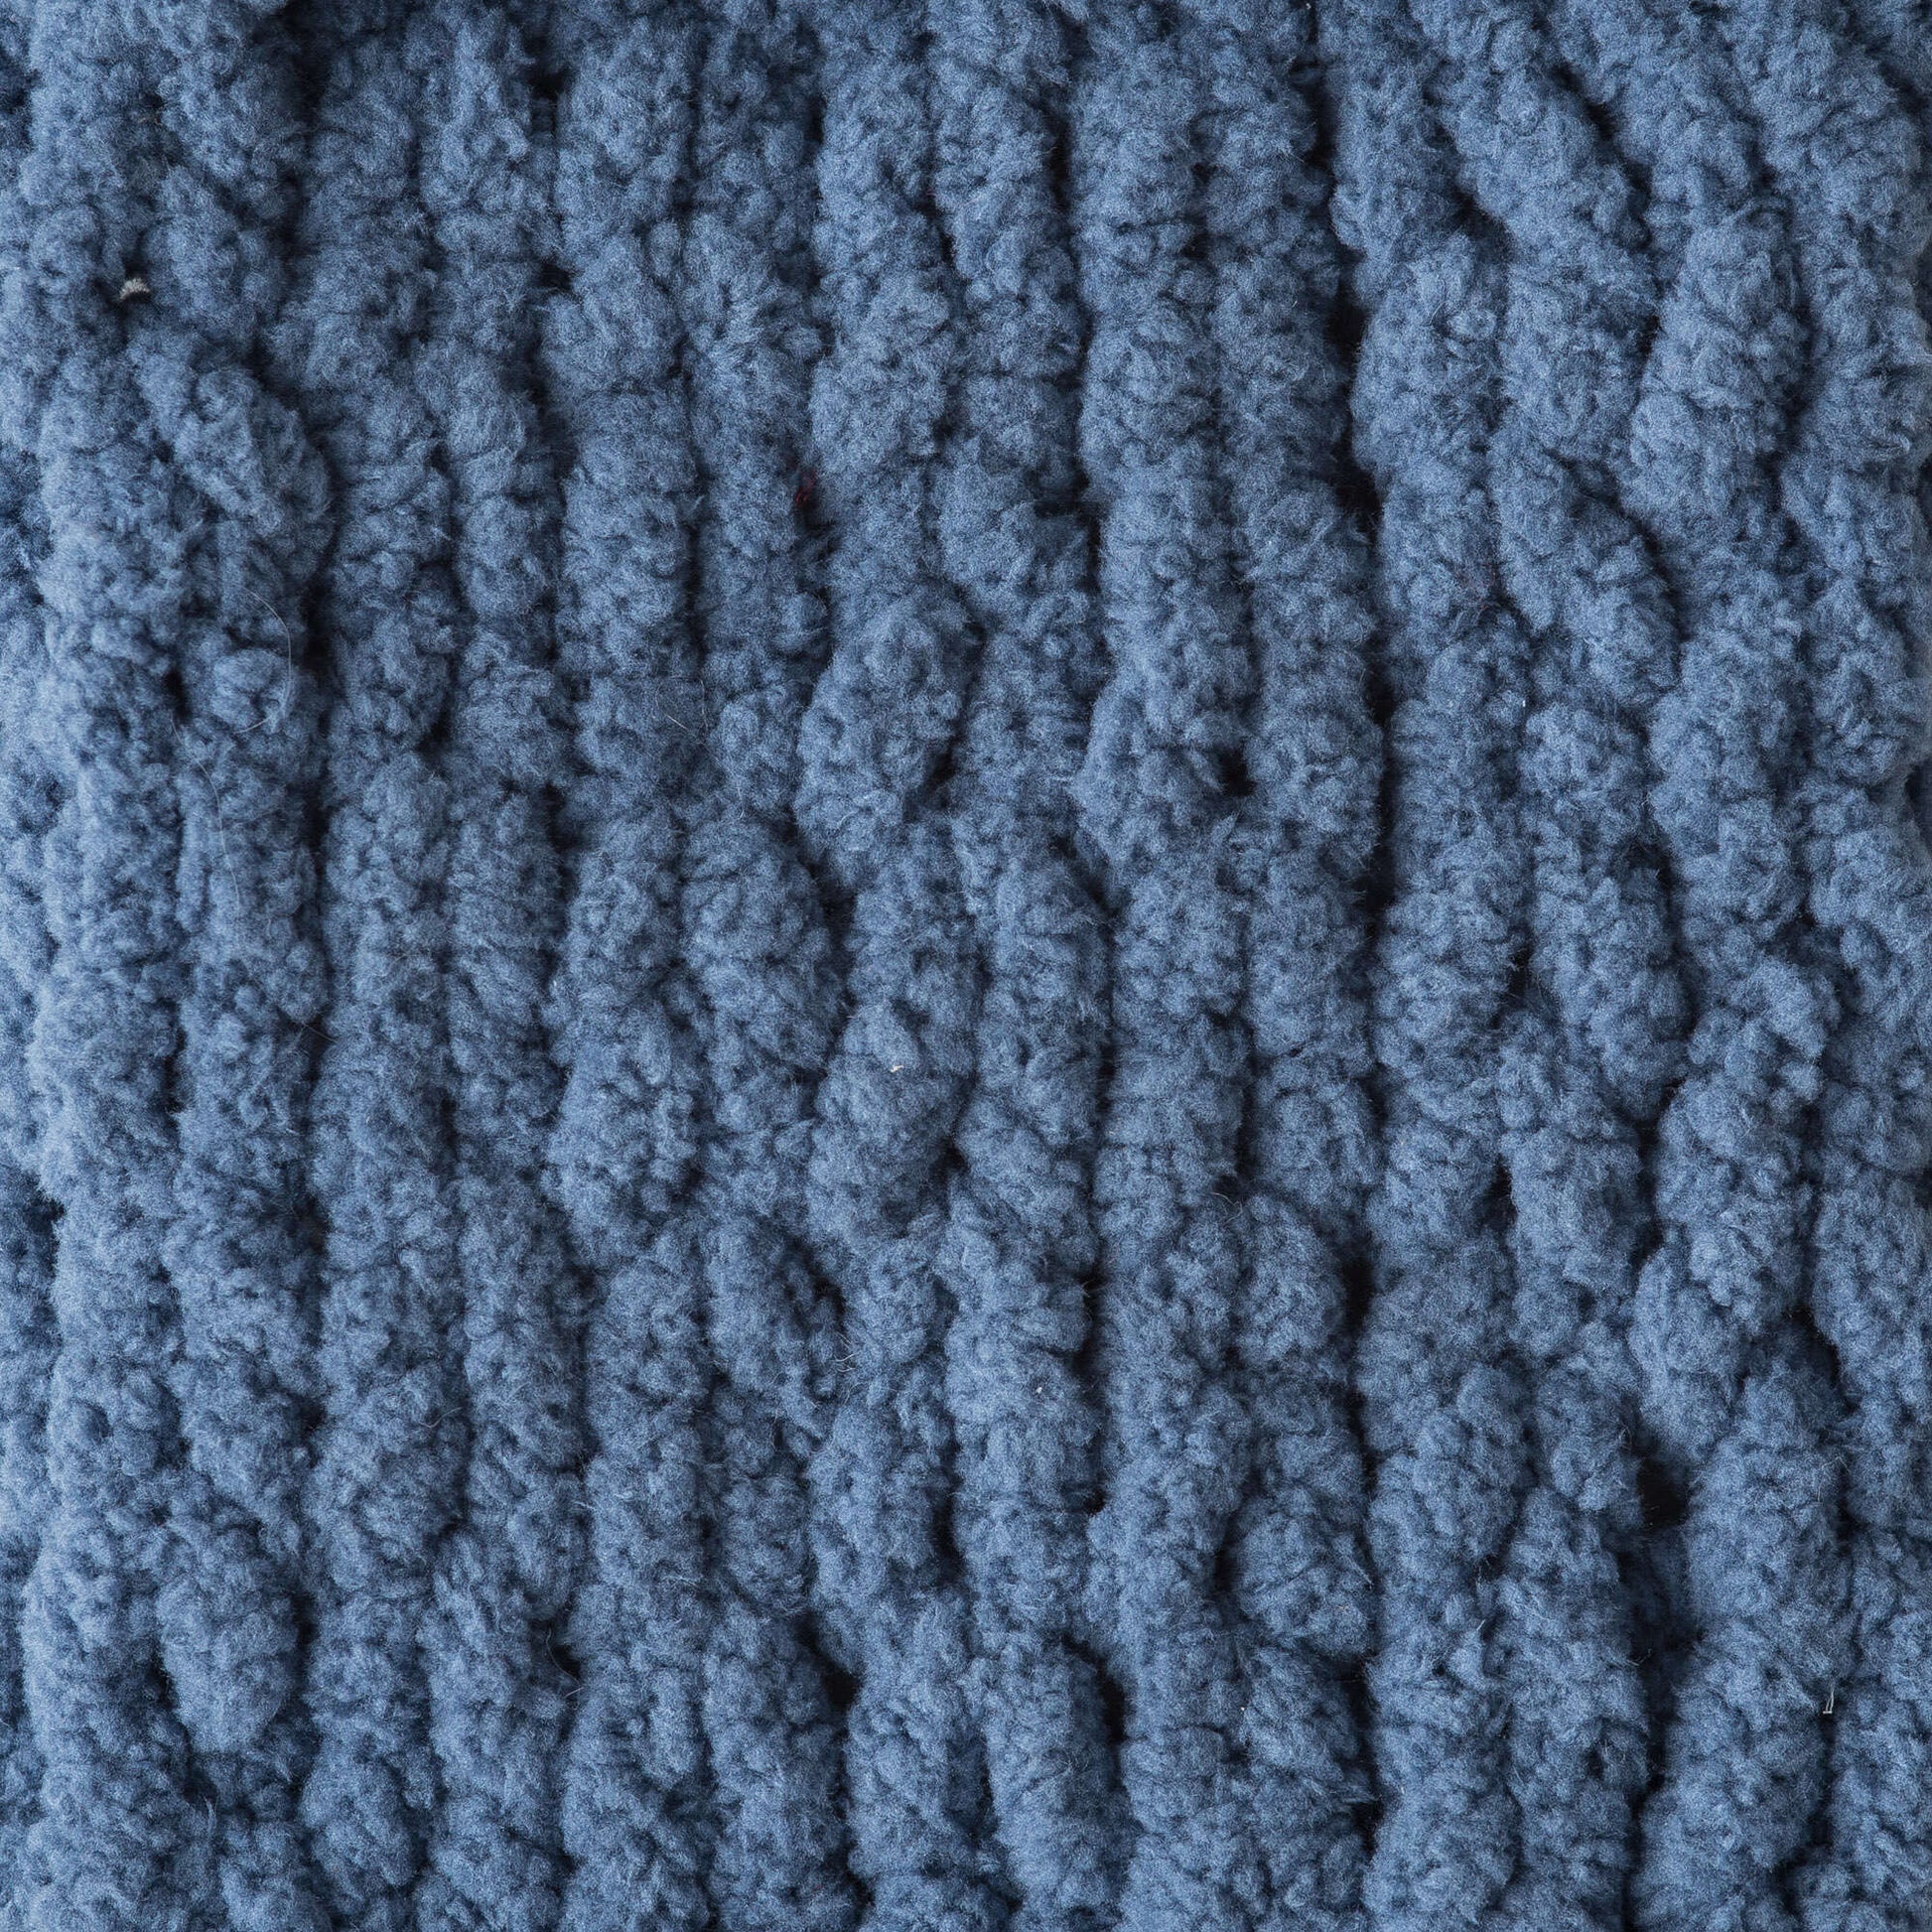 Bernat Blanket Yarn (300g/10.5oz) Country Blue